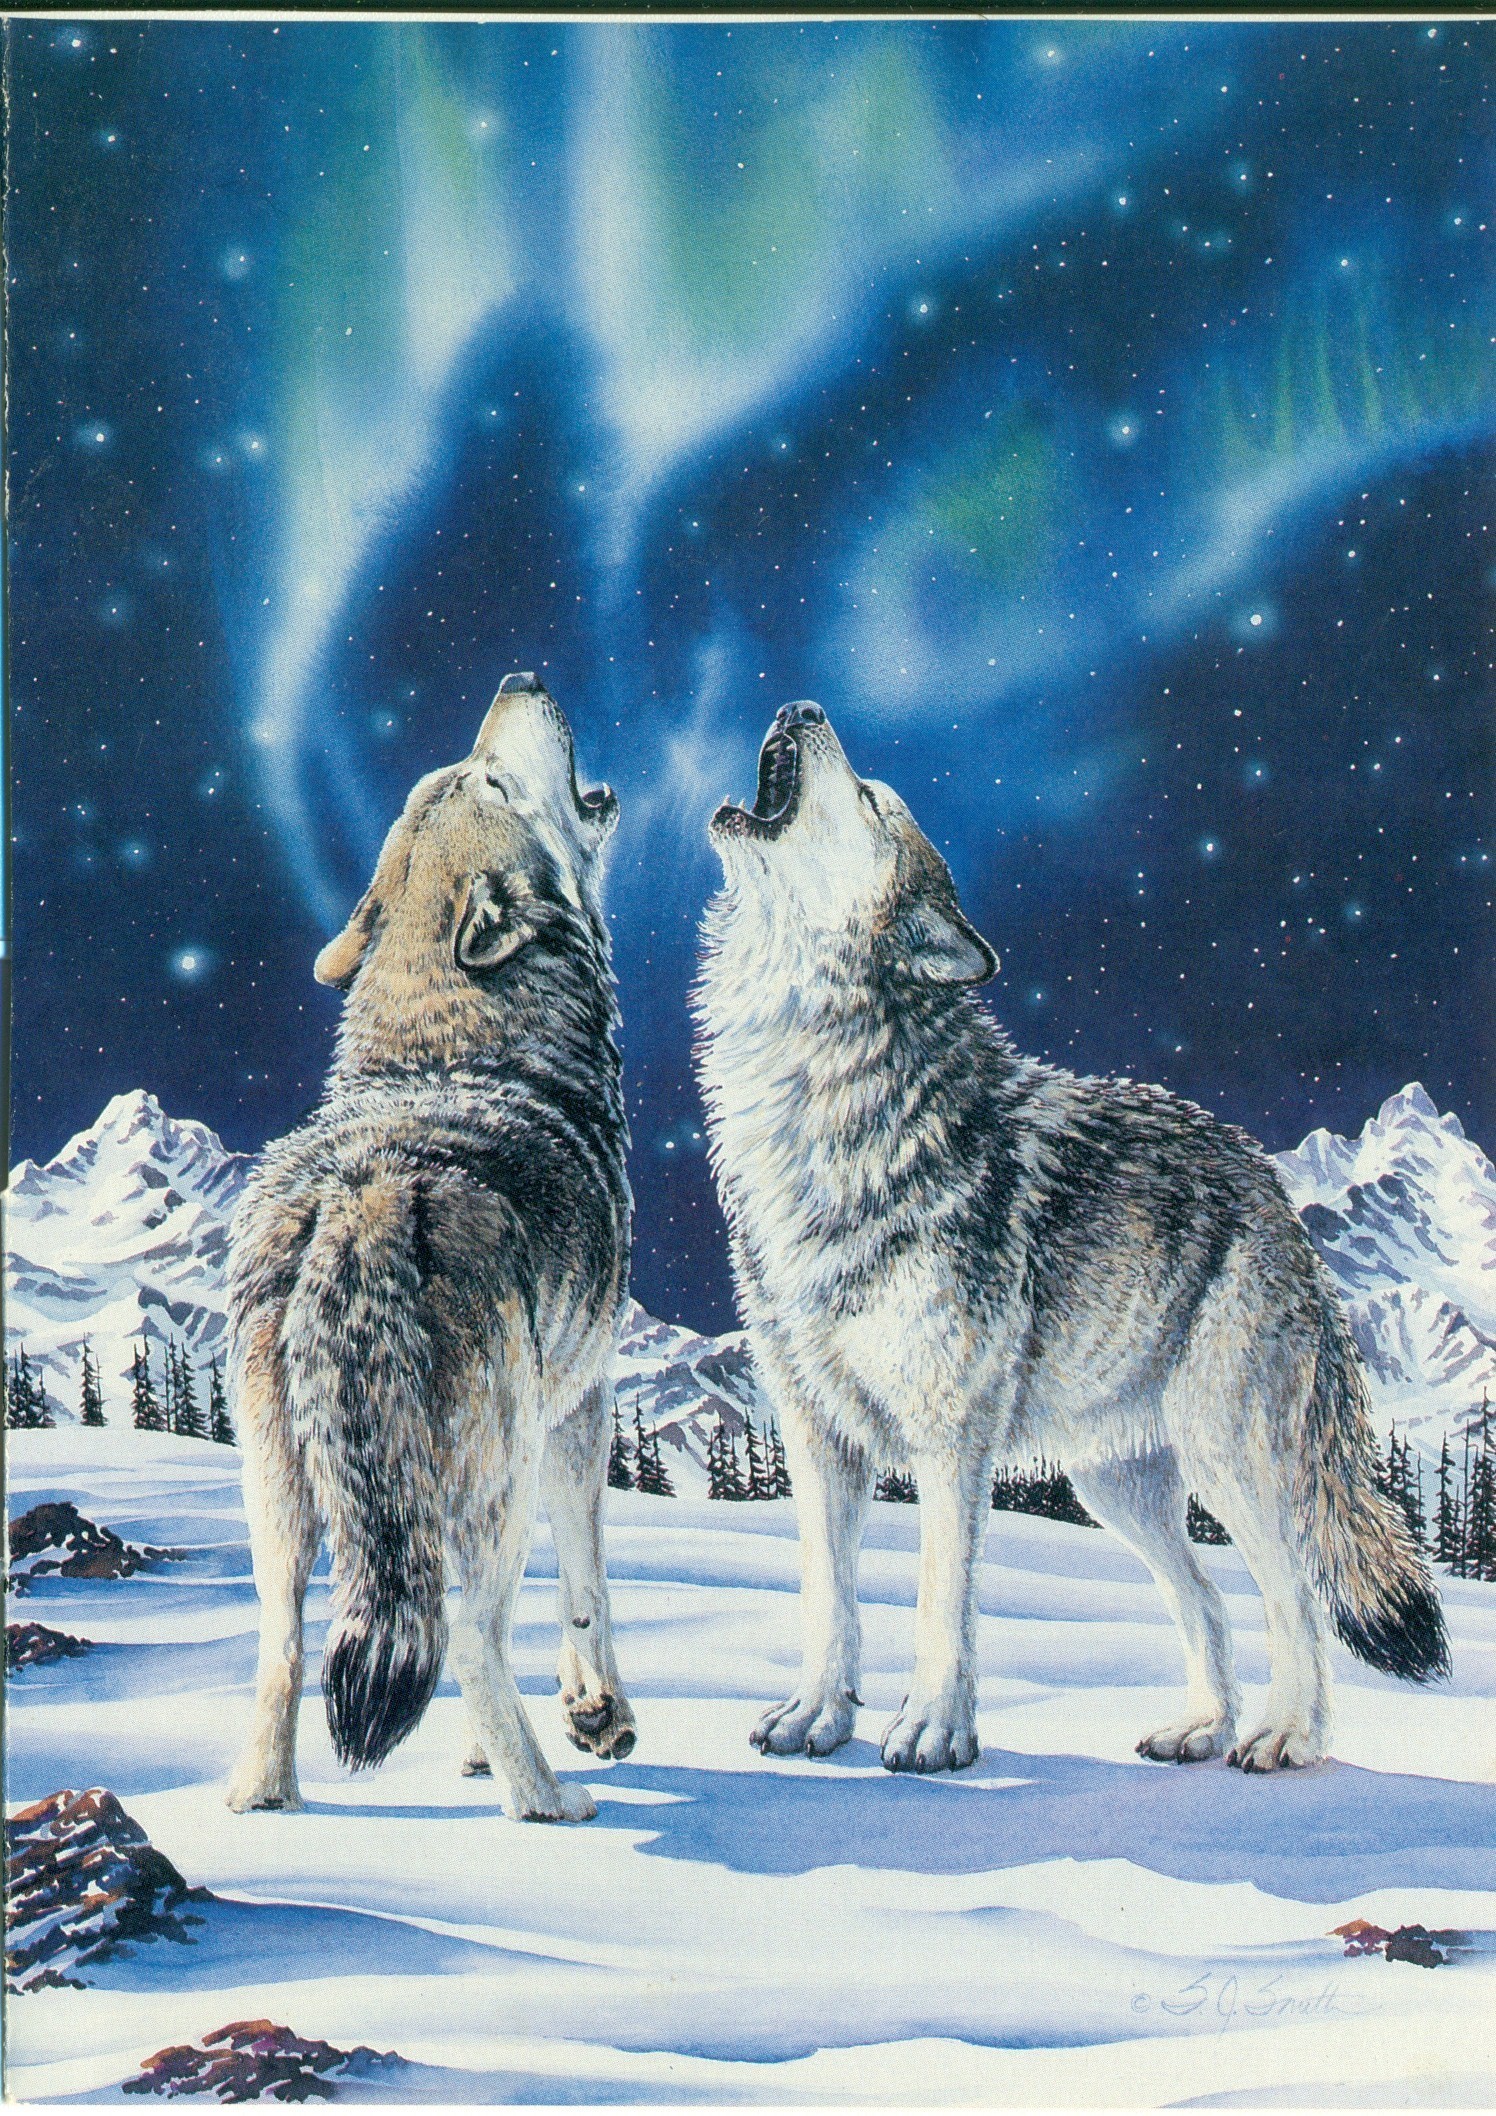 Wolf Aurora Borealis Wallpapers